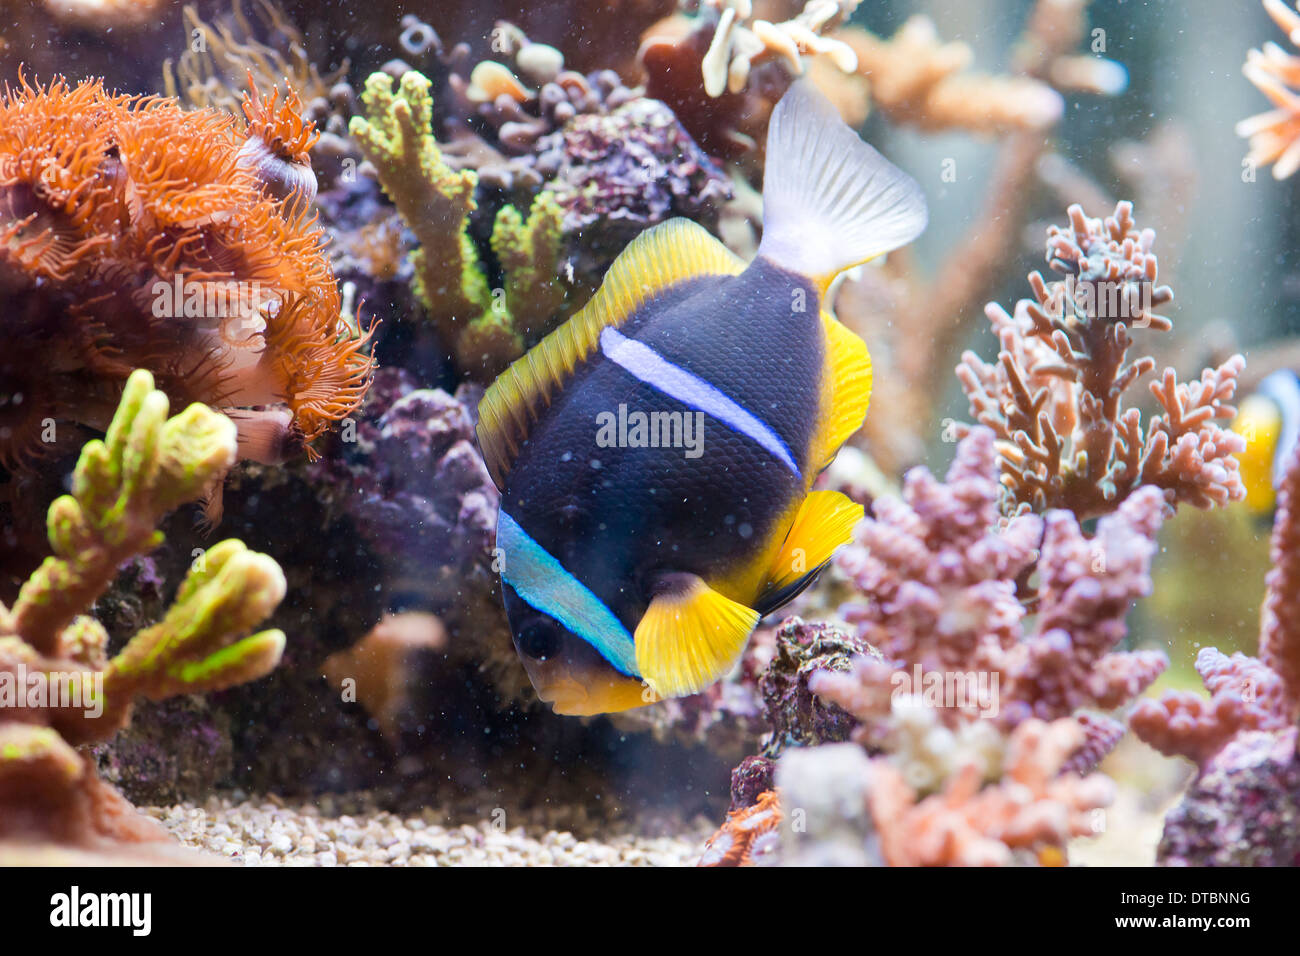 Amphiprion clarkii - Clarkii Clownfish - colorful sea fish Stock Photo